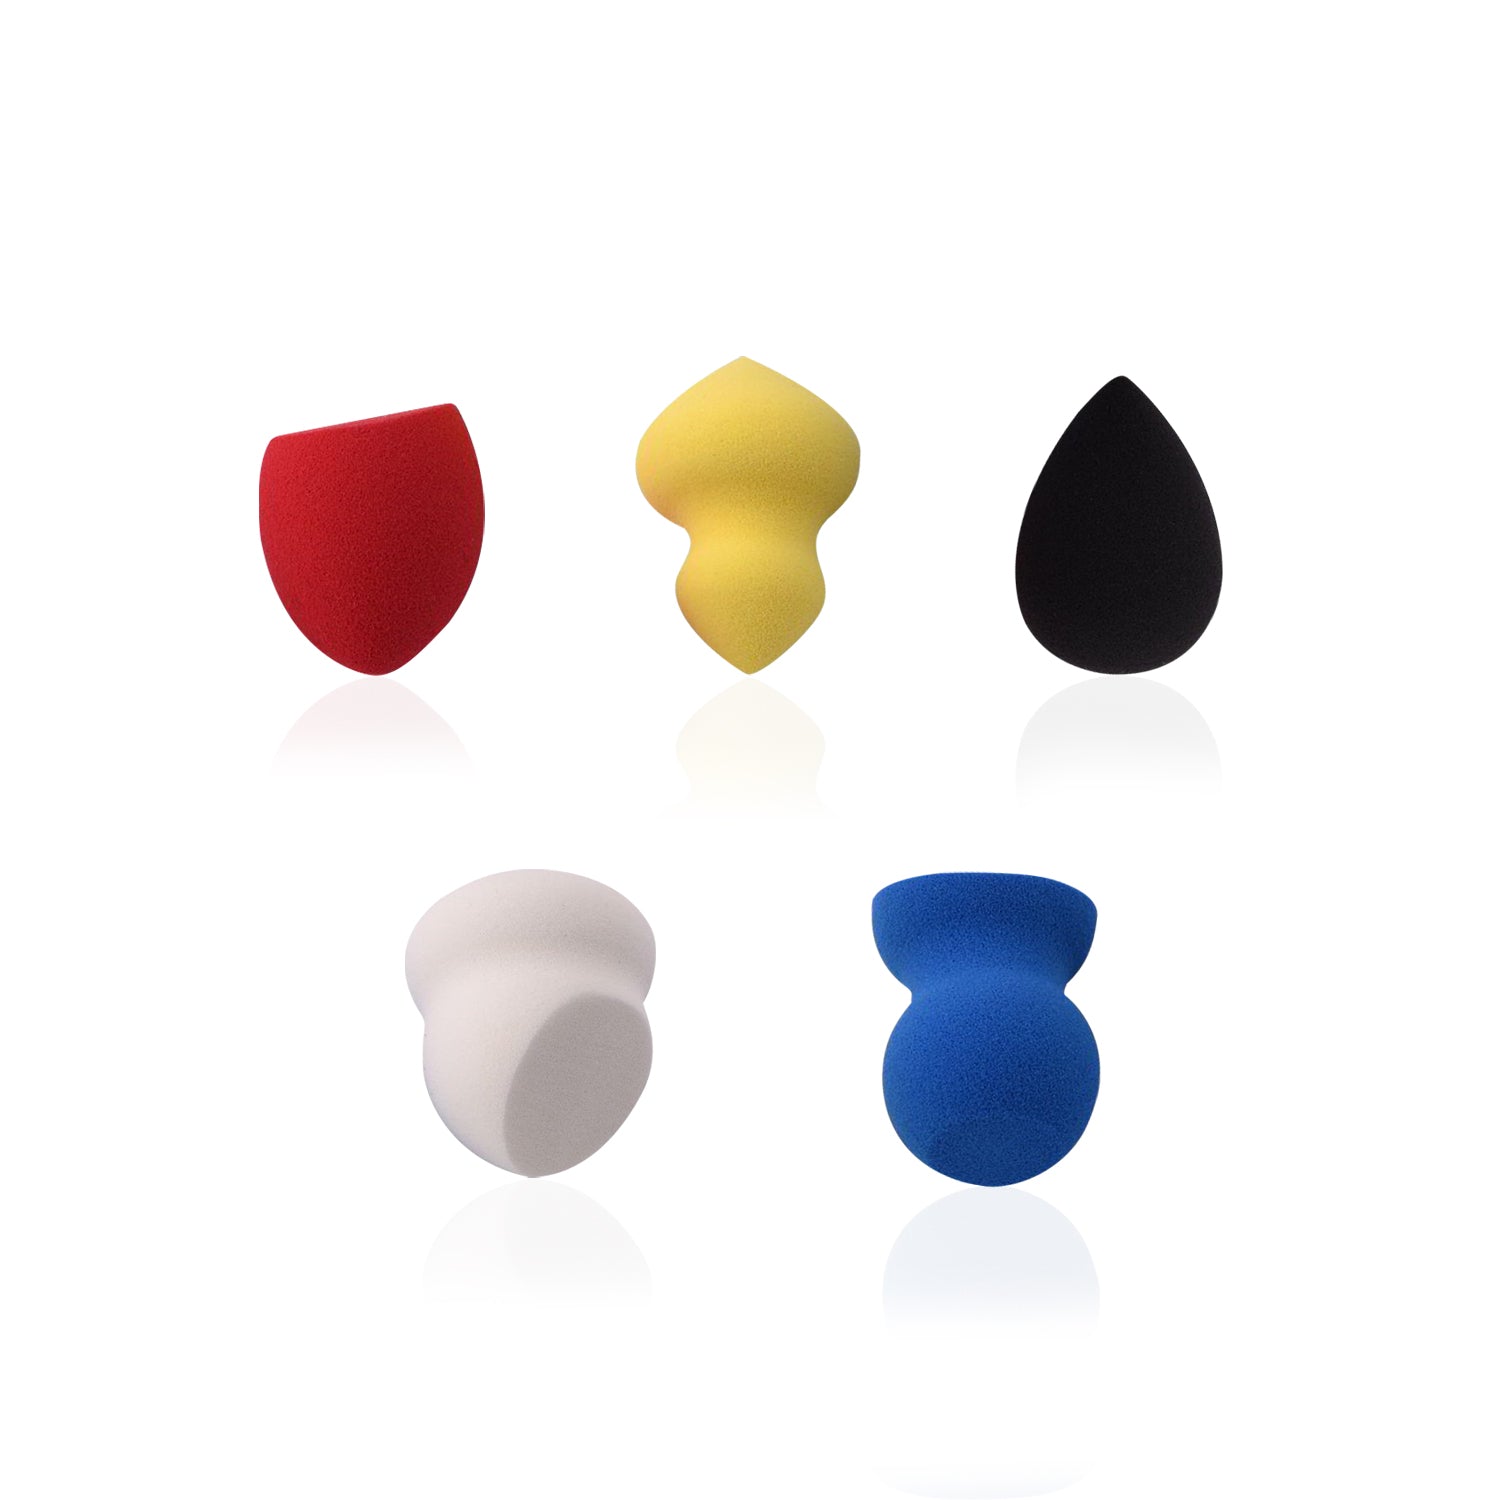 PAC Cosmetics 5 in 1 Mini Set (Multi-Shapes) (Multi-Color) (5 Pc)